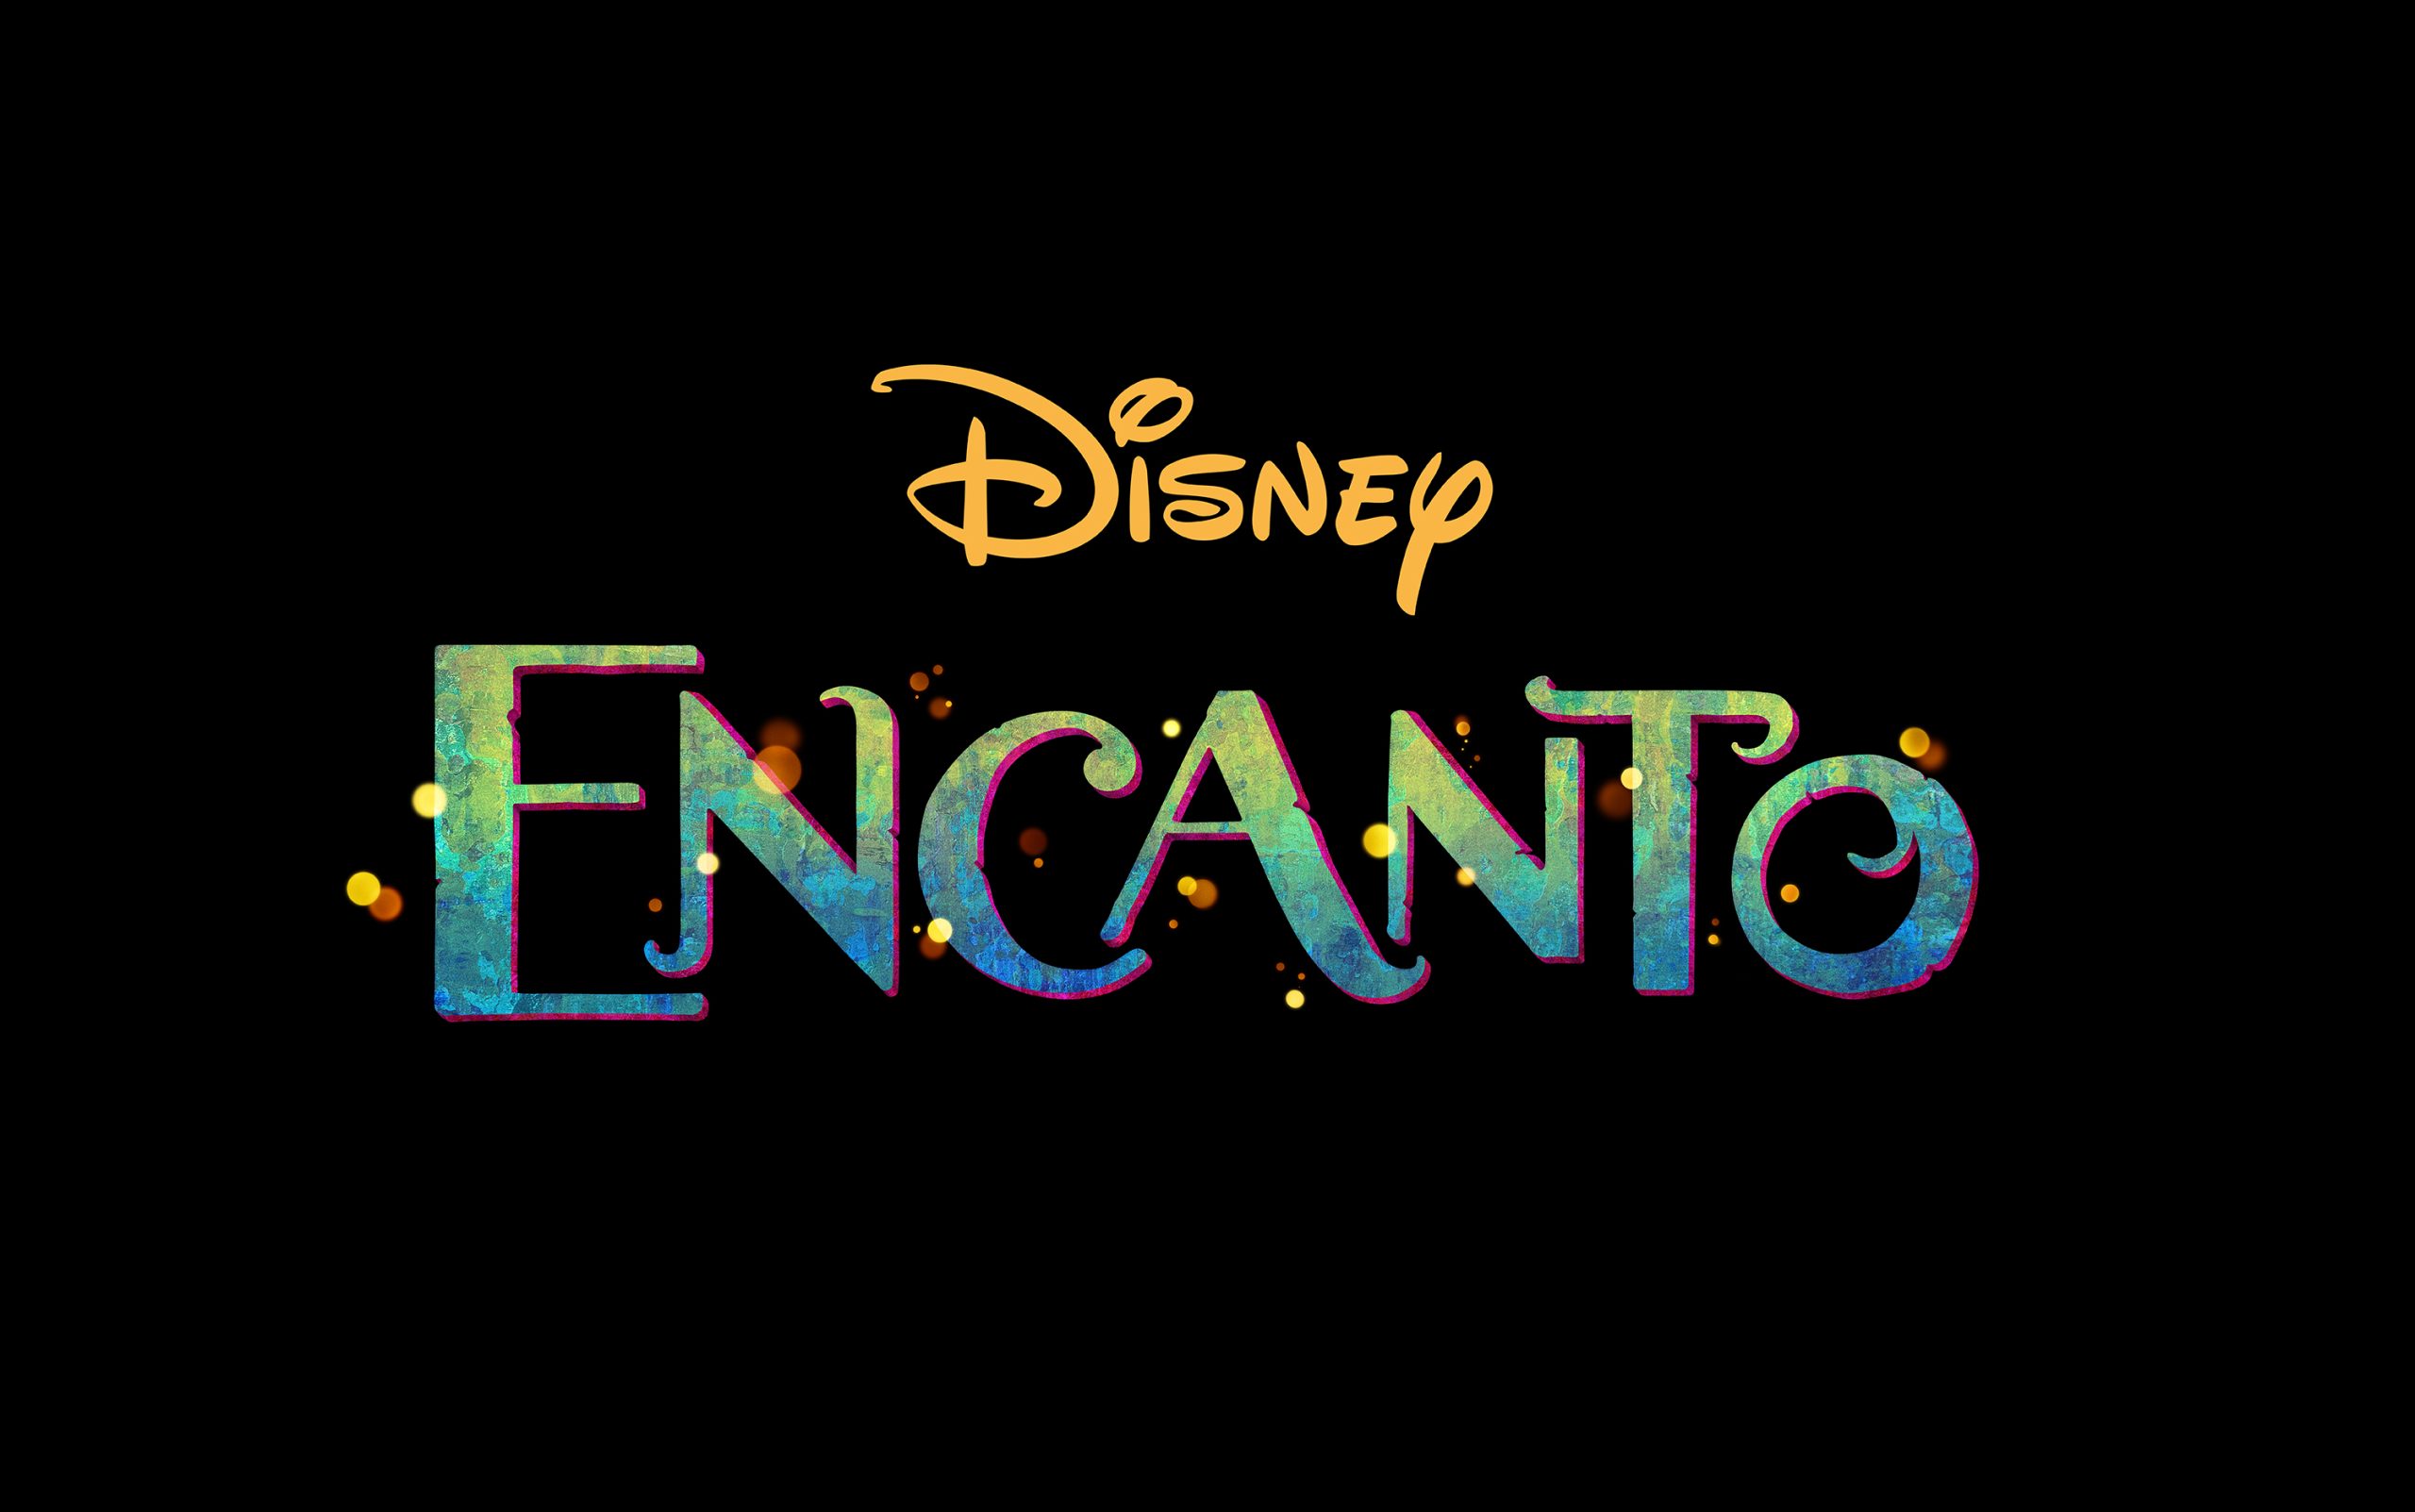 Disney Encanto Coloring Pages for kids